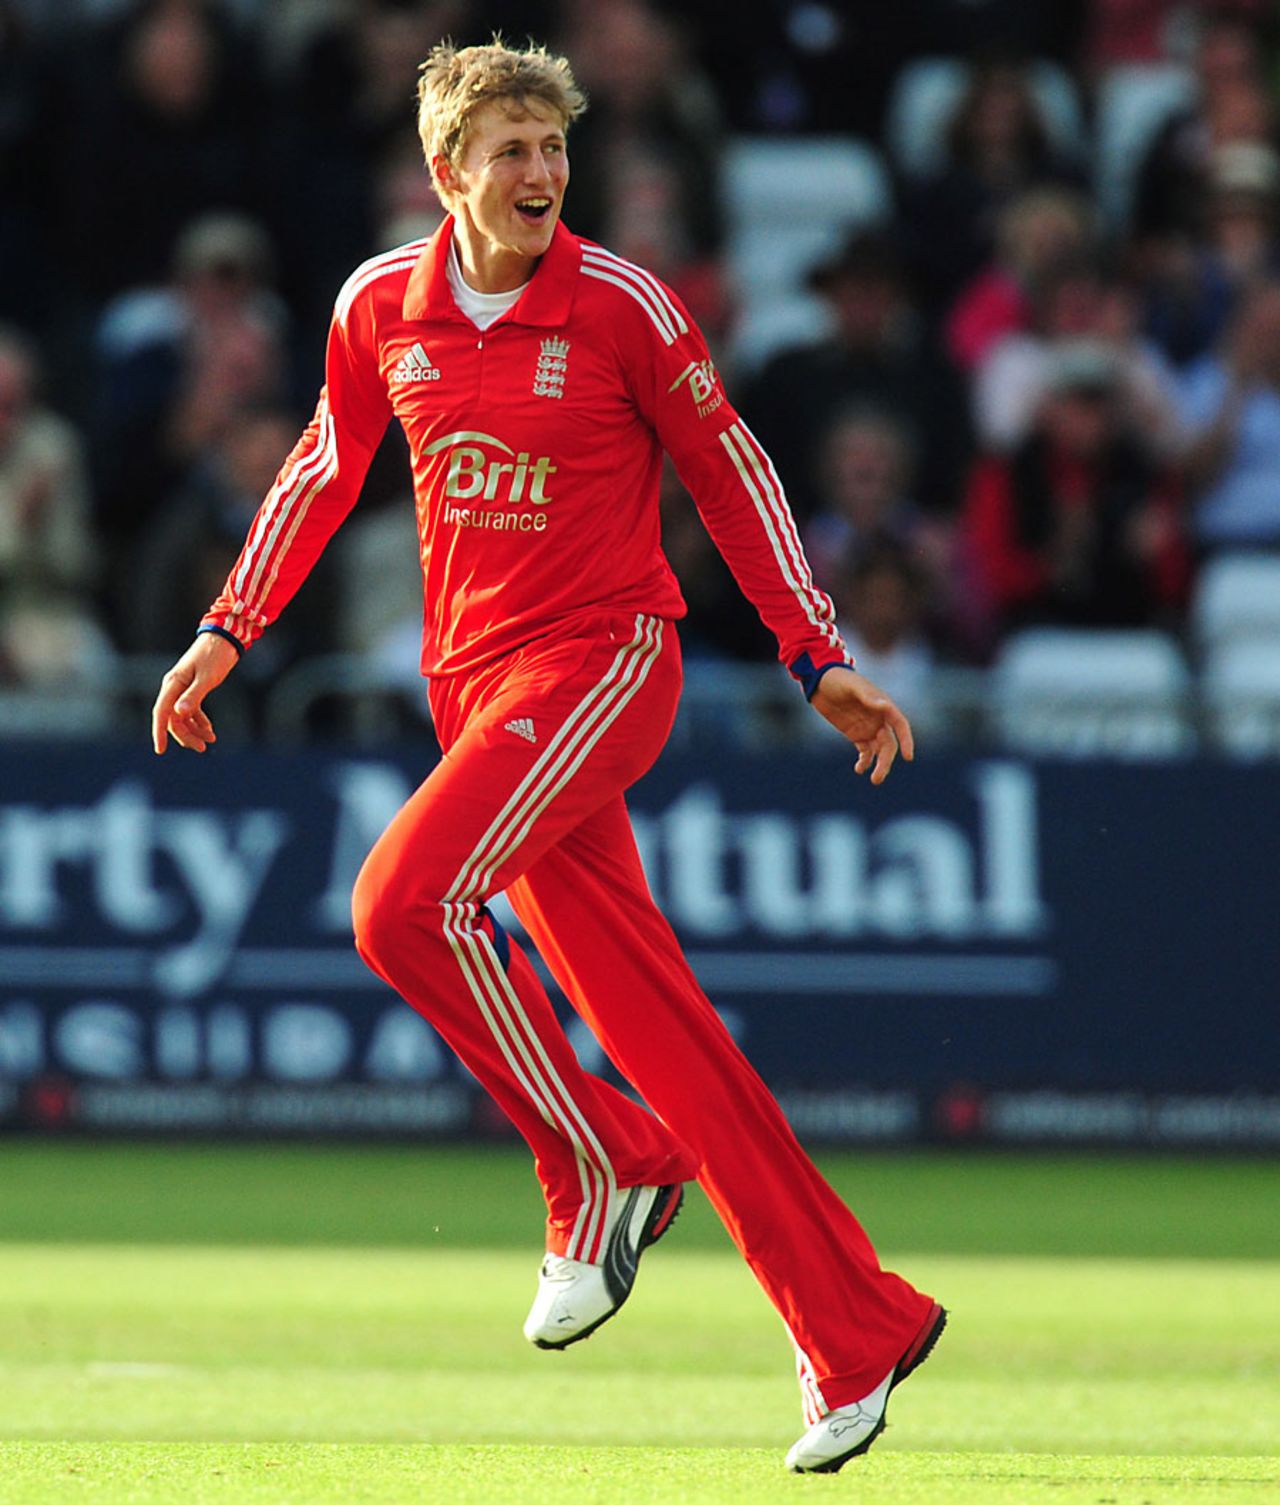 Joe Root runs off in celebration after his first ODI wicket, England v New Zealand, 2nd ODI, Trent Bridge, June 5, 2013